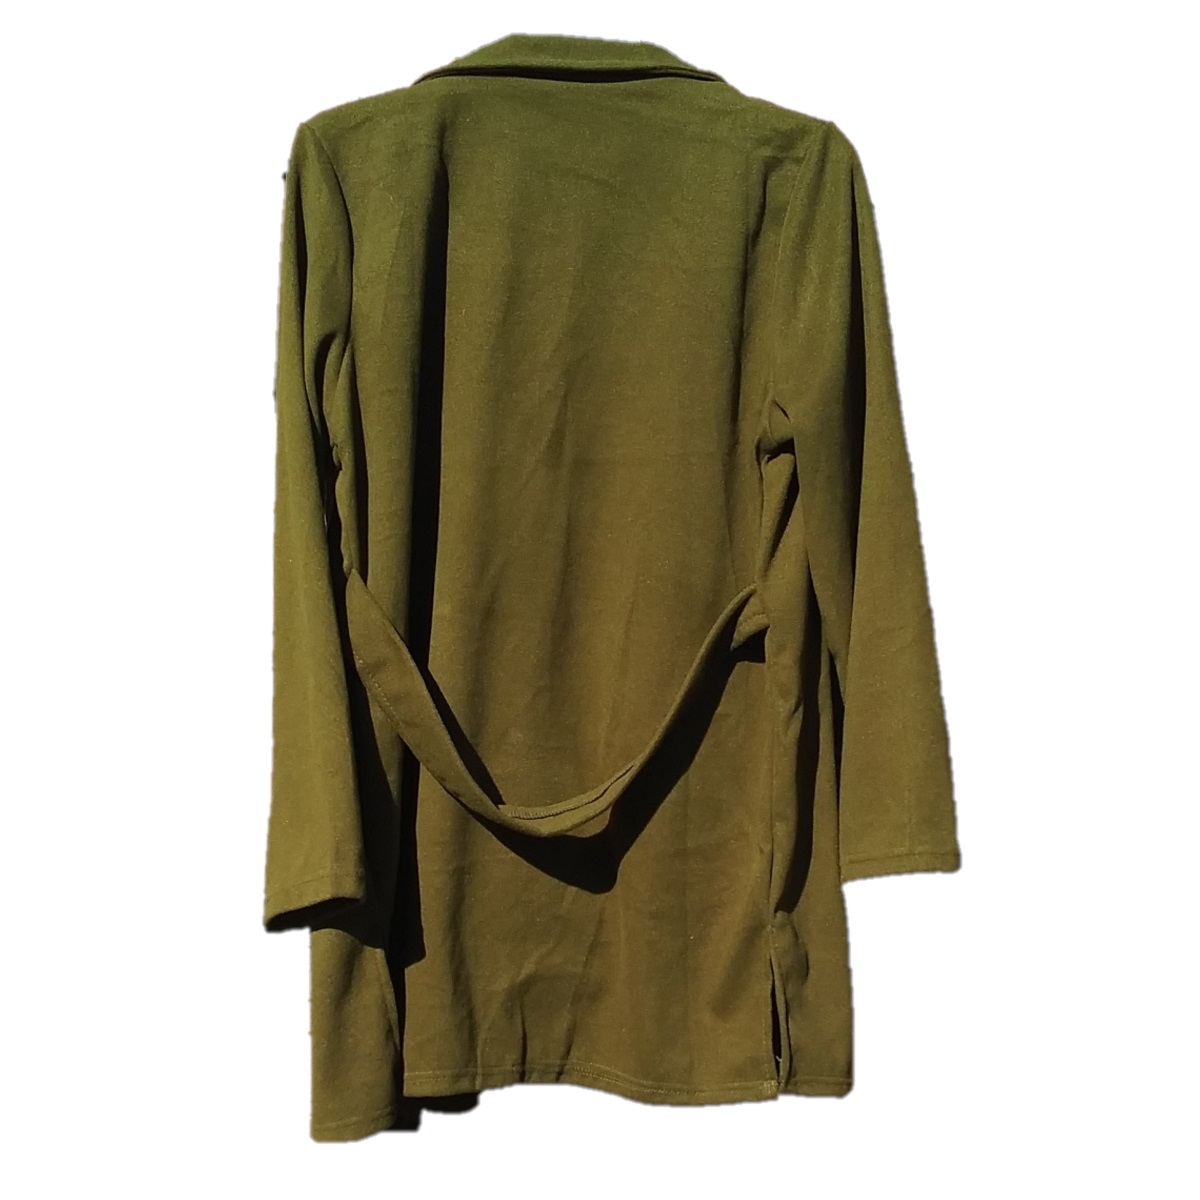 Women's Winter Coat, mid thigh long coat, formal coat, green, belted,